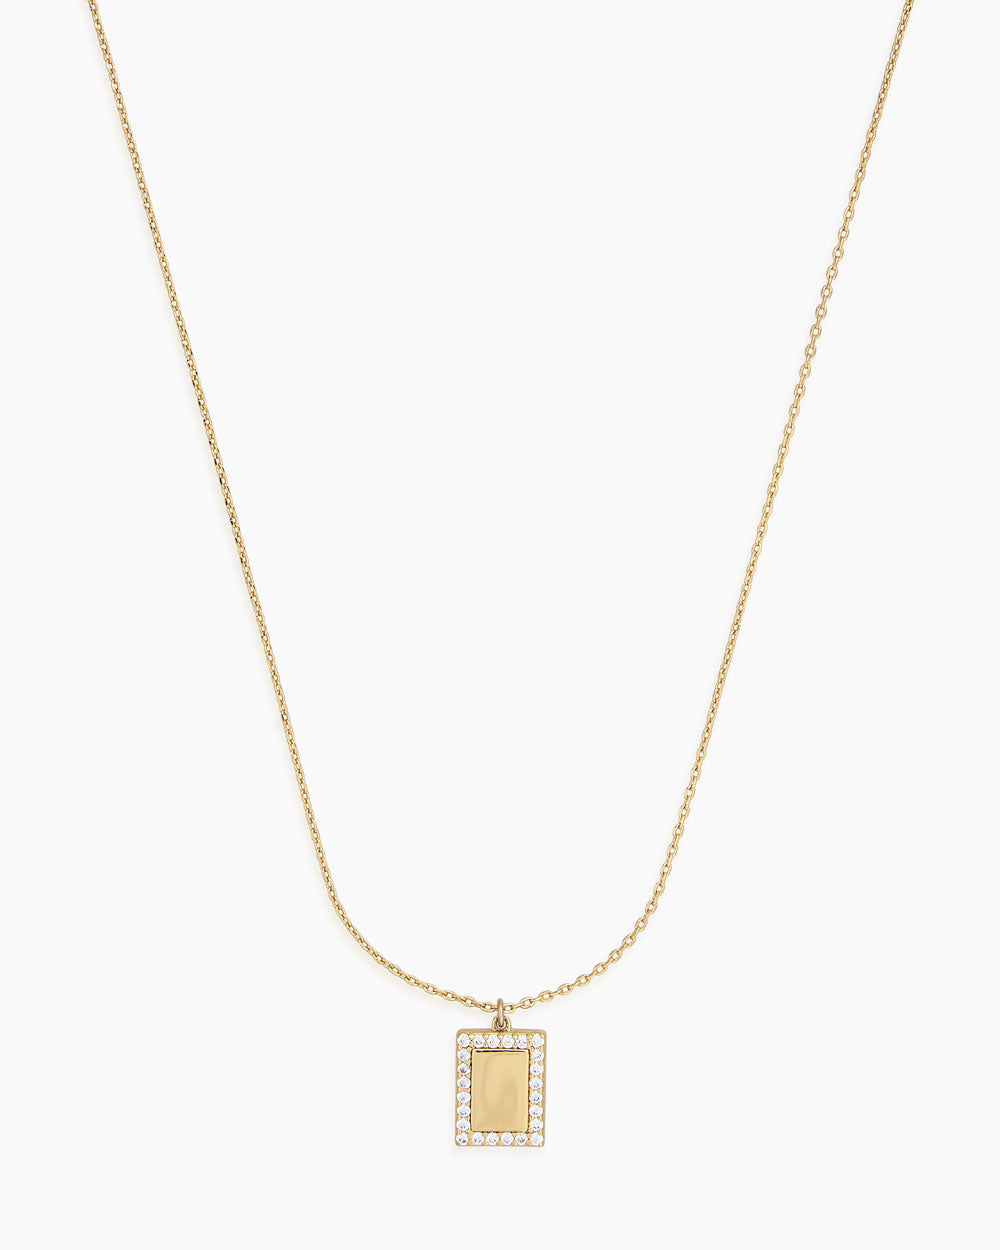 Eloise Gold Locket Necklace